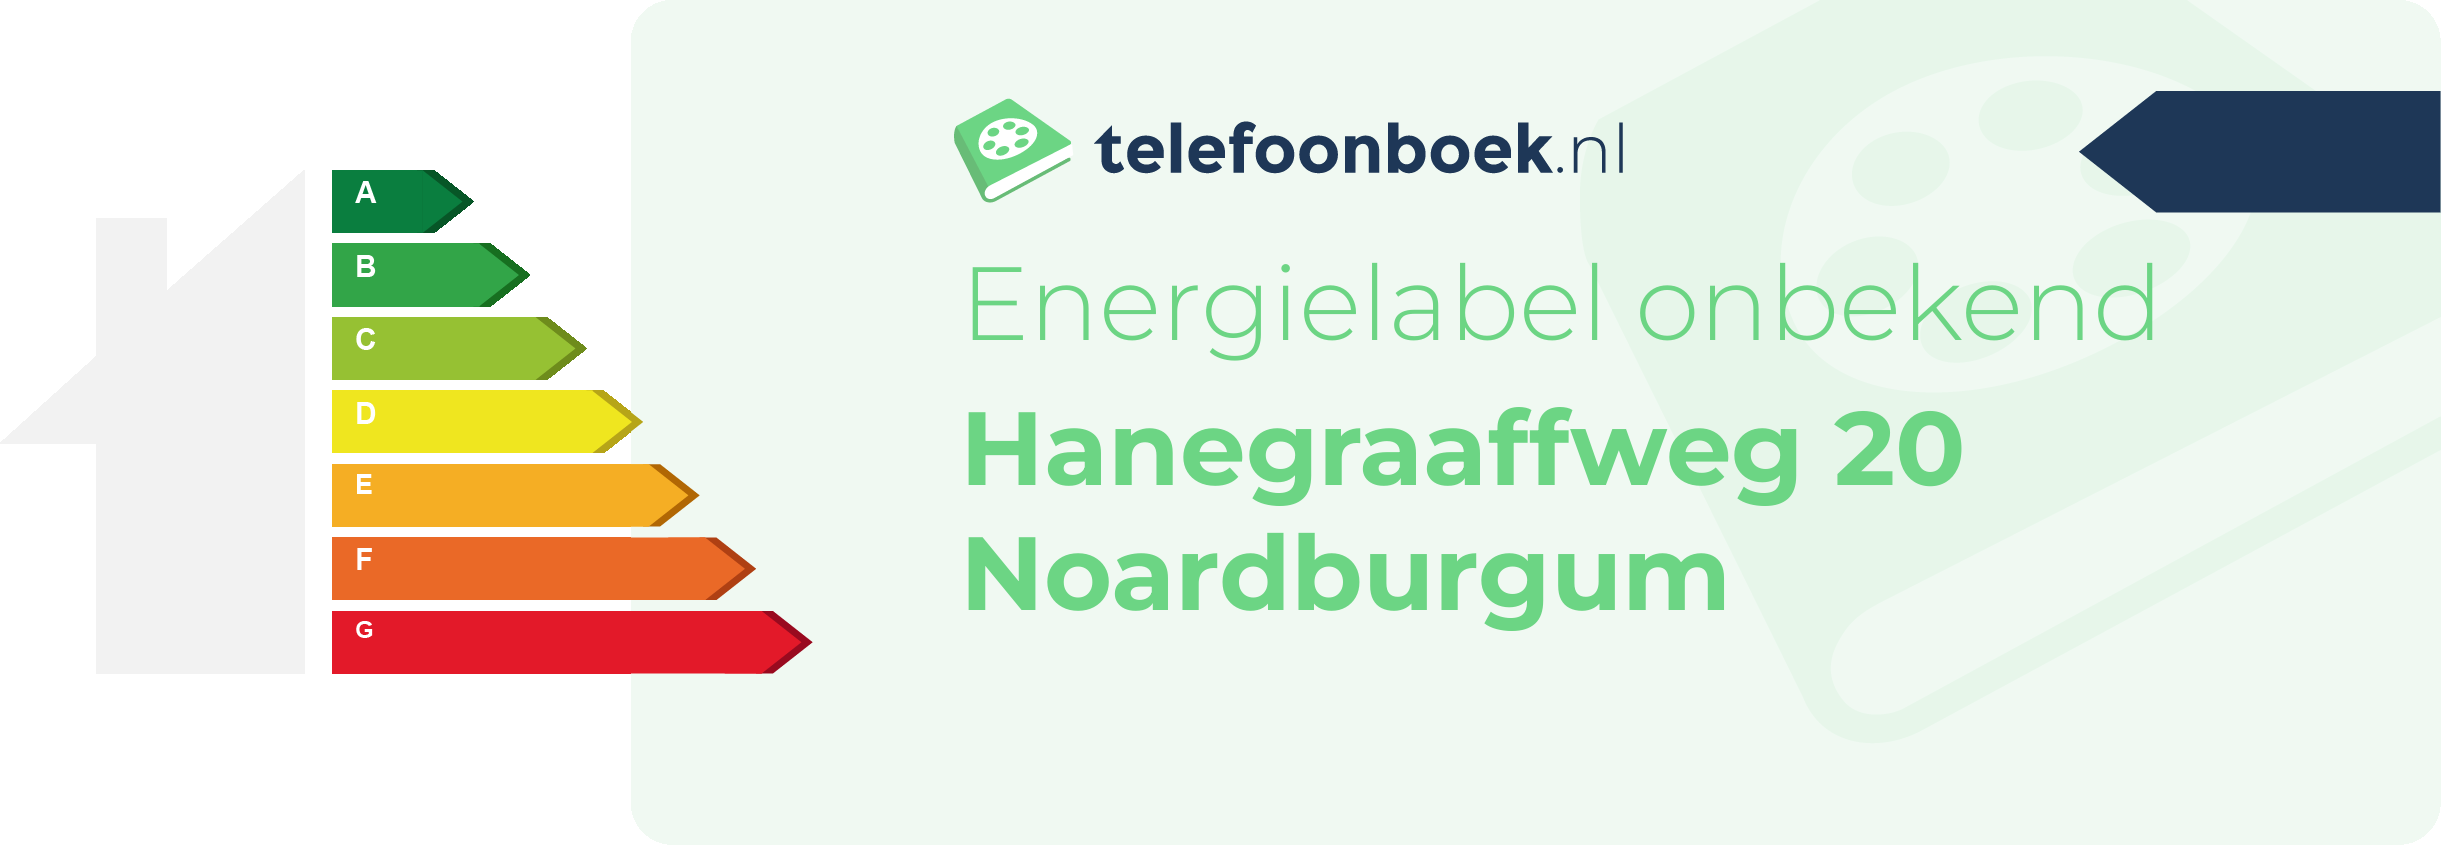 Energielabel Hanegraaffweg 20 Noardburgum